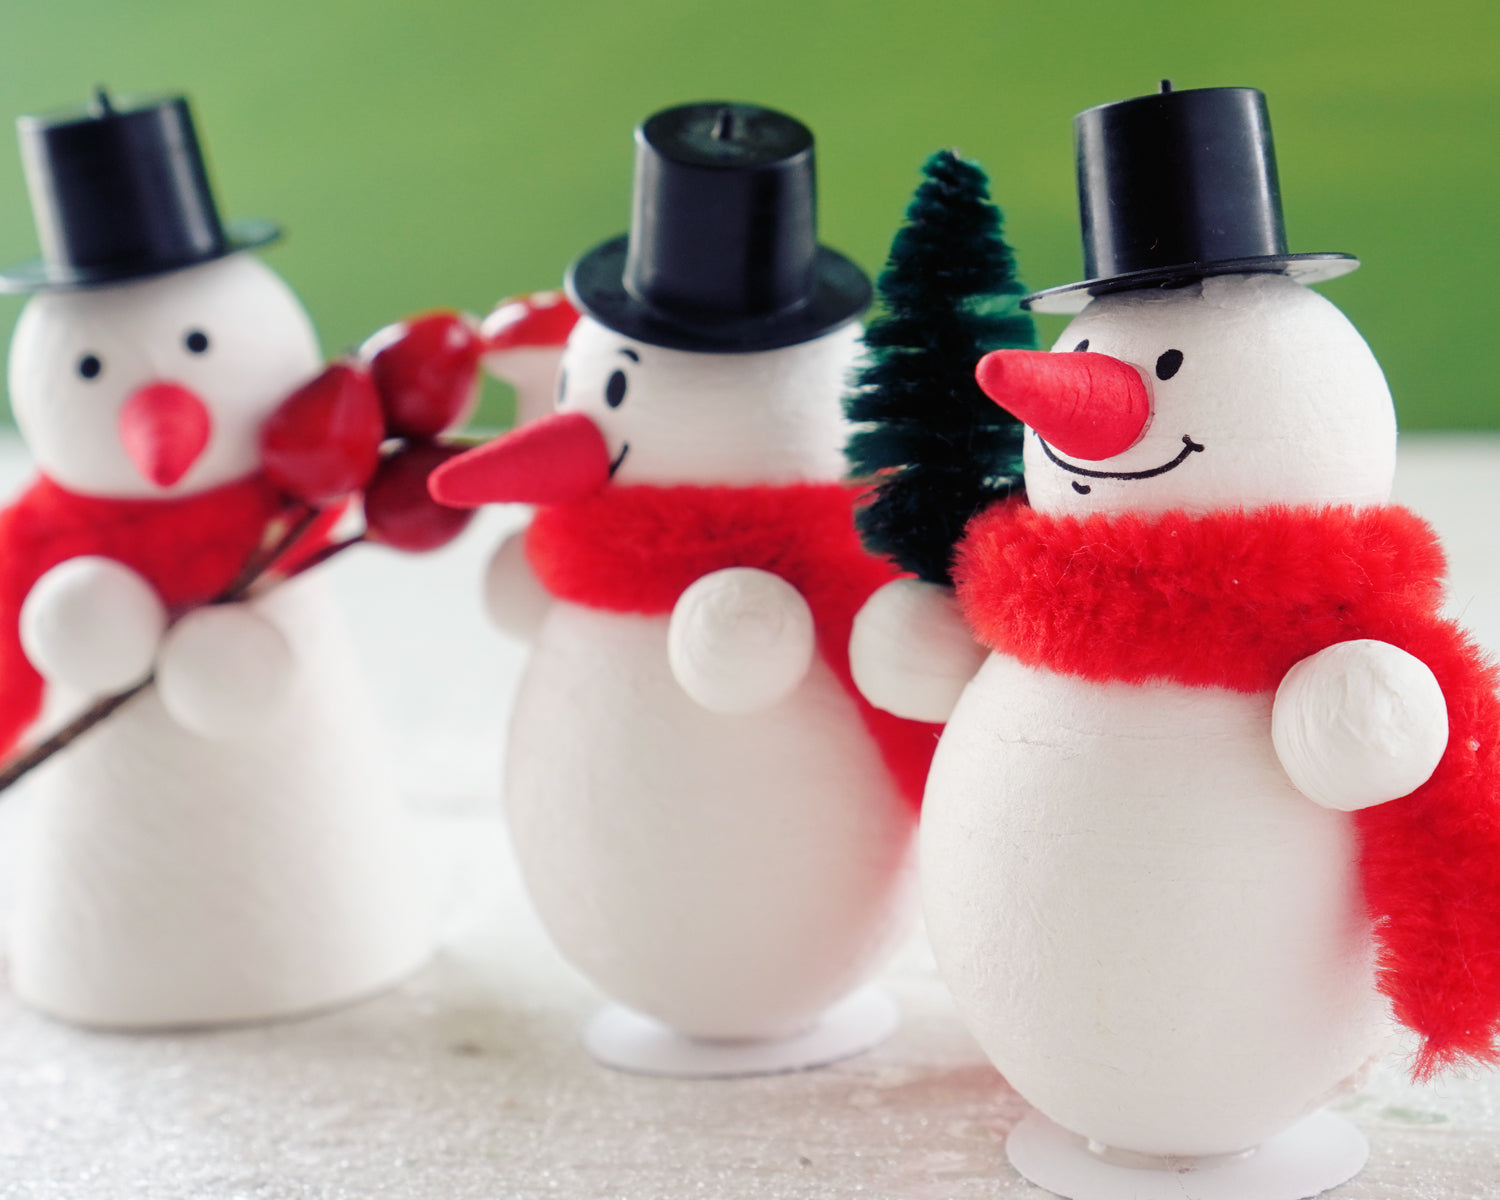 Snowman Craft Kit - DIY Spun Cotton Snowmen Christmas Decorations